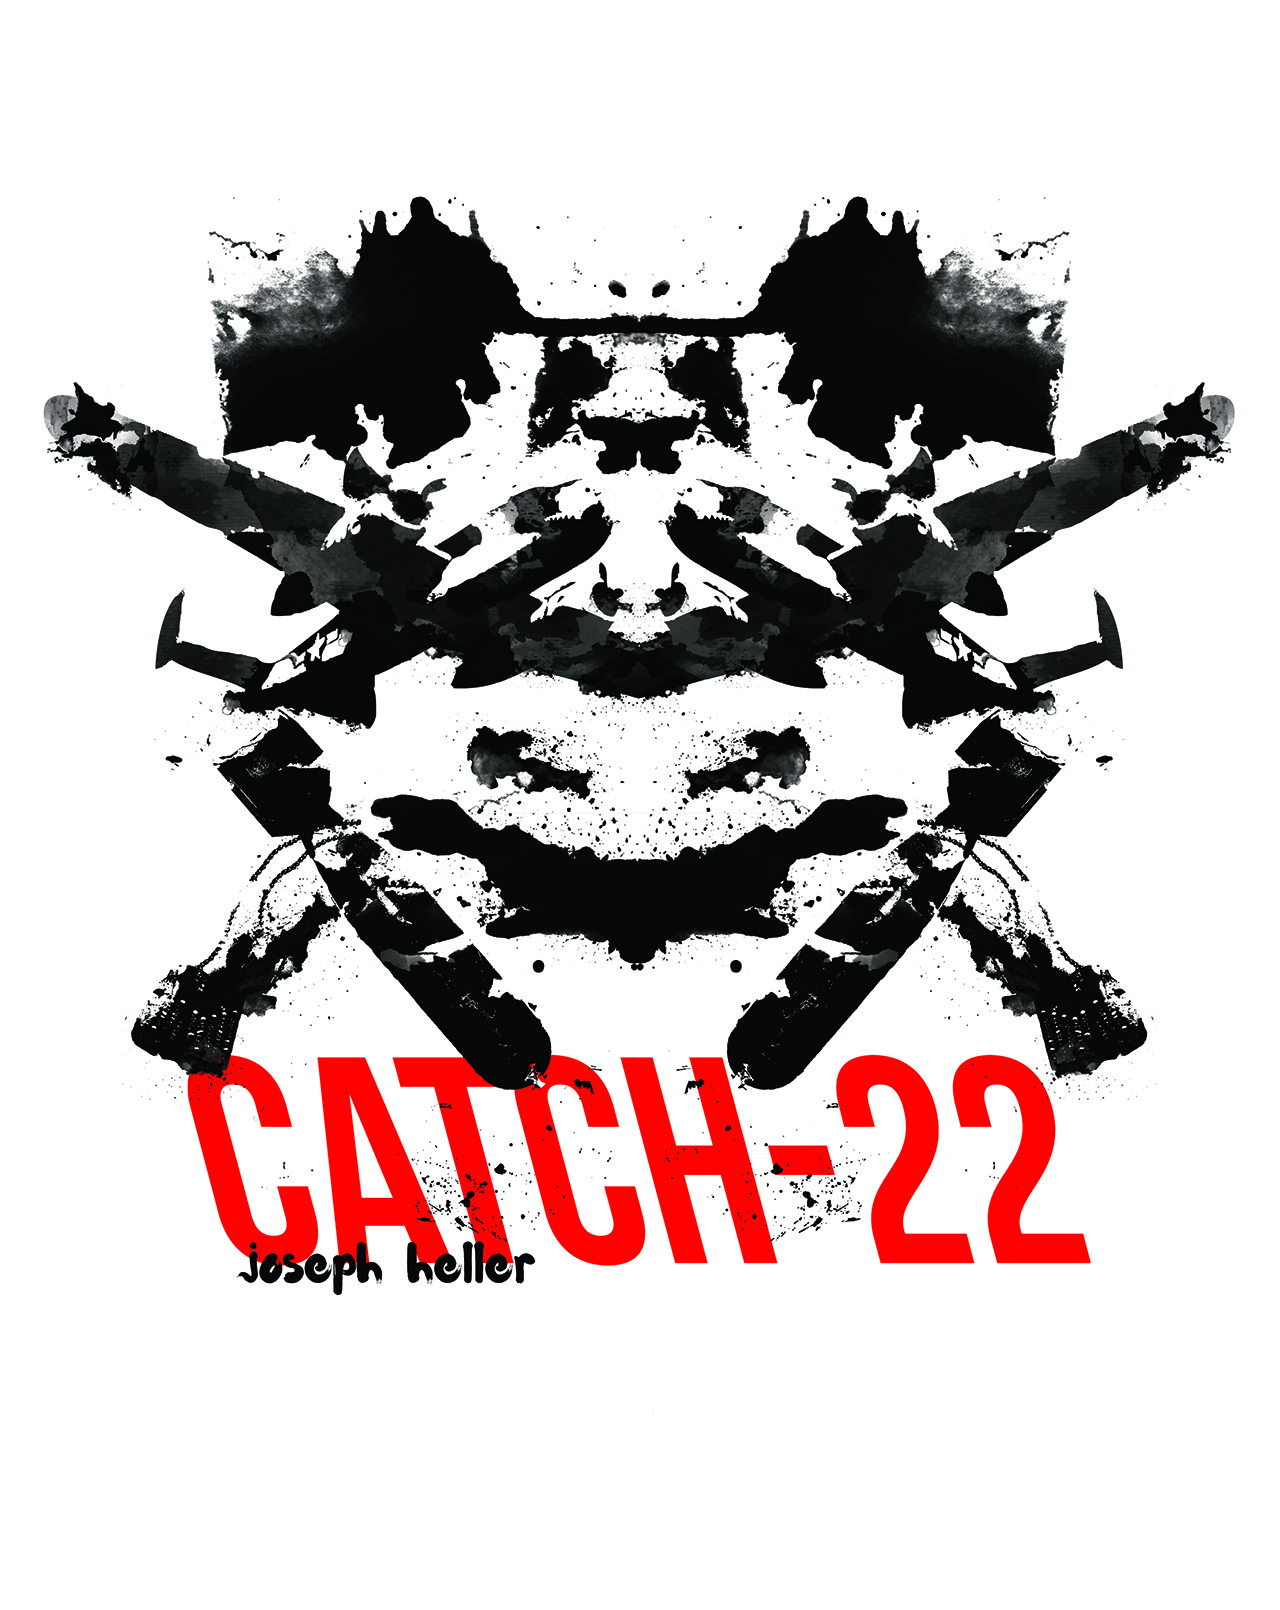 Chris Graver | "Catch 22" by Joseph Heller